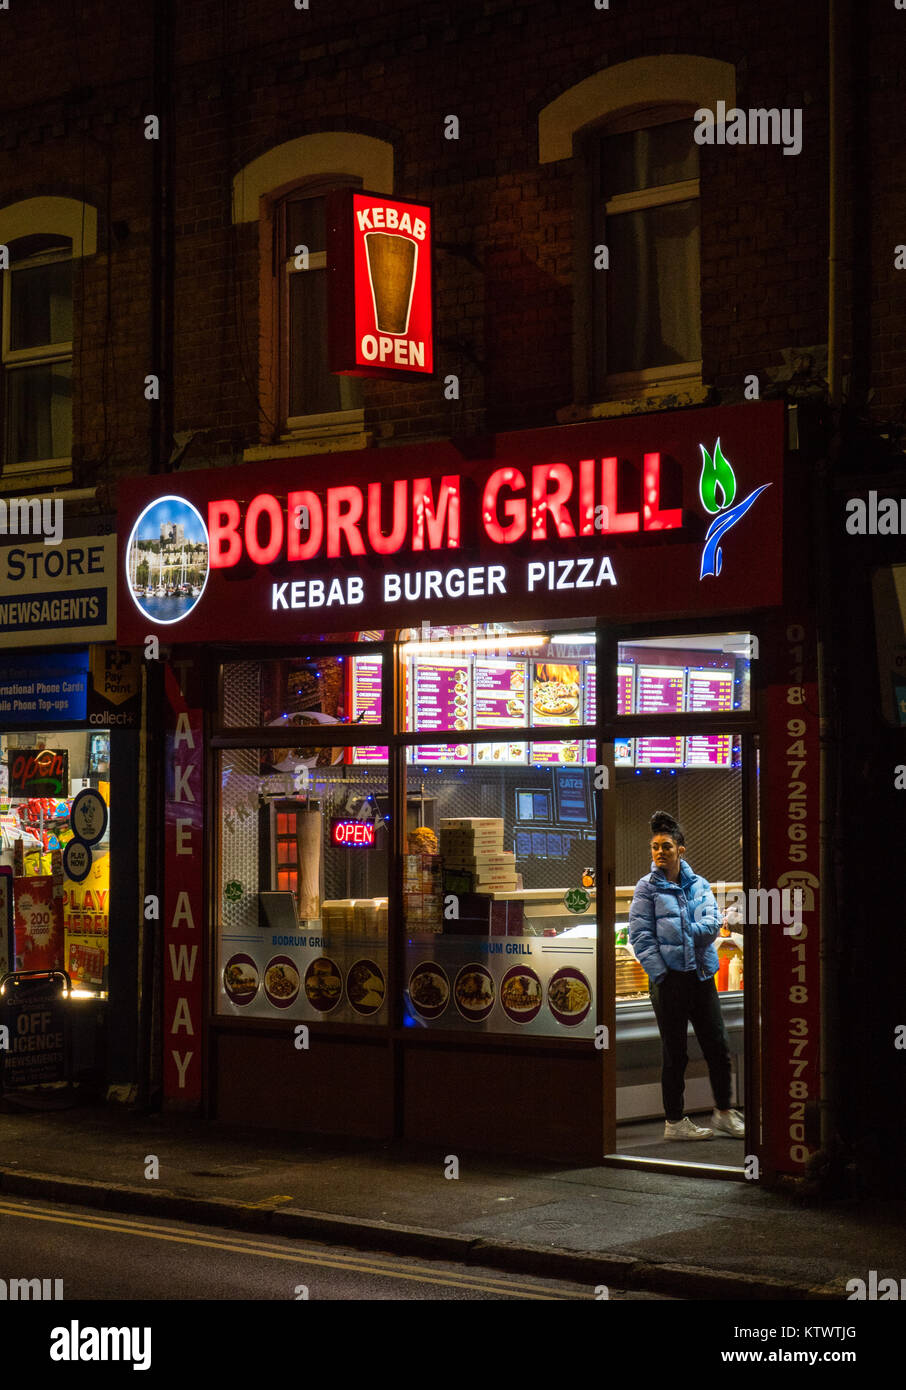 Bodrum Grill Kebab Shop, Caversham, Reading, Berkshire, England, UK, GB  Stockfotografie - Alamy